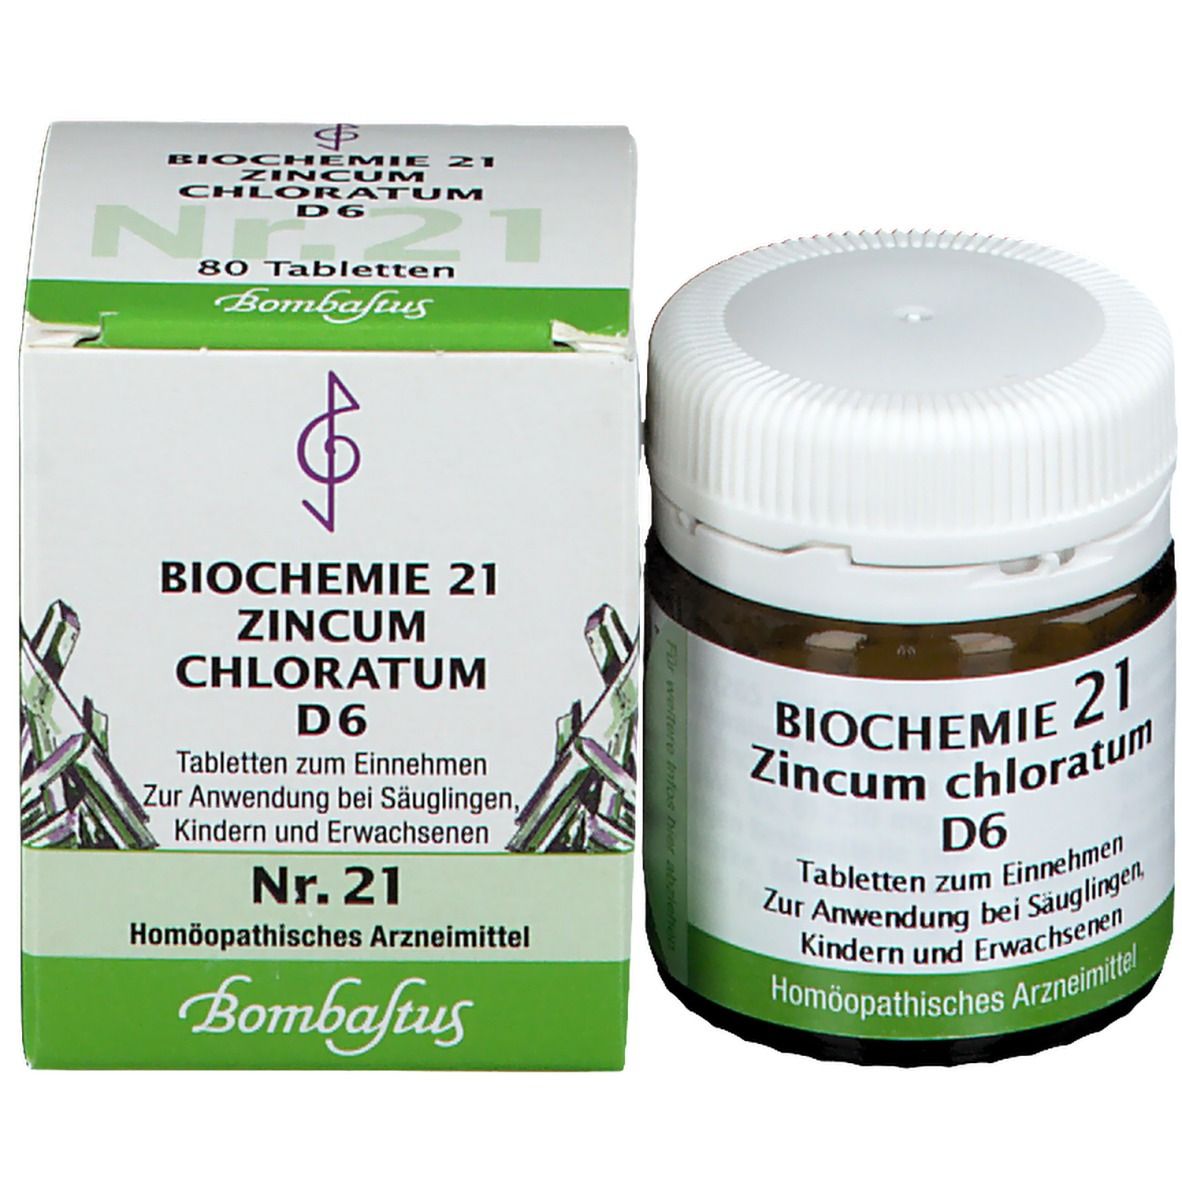 Bombastus Biochemie 21 Zincum chloratum D 6 Tabletten